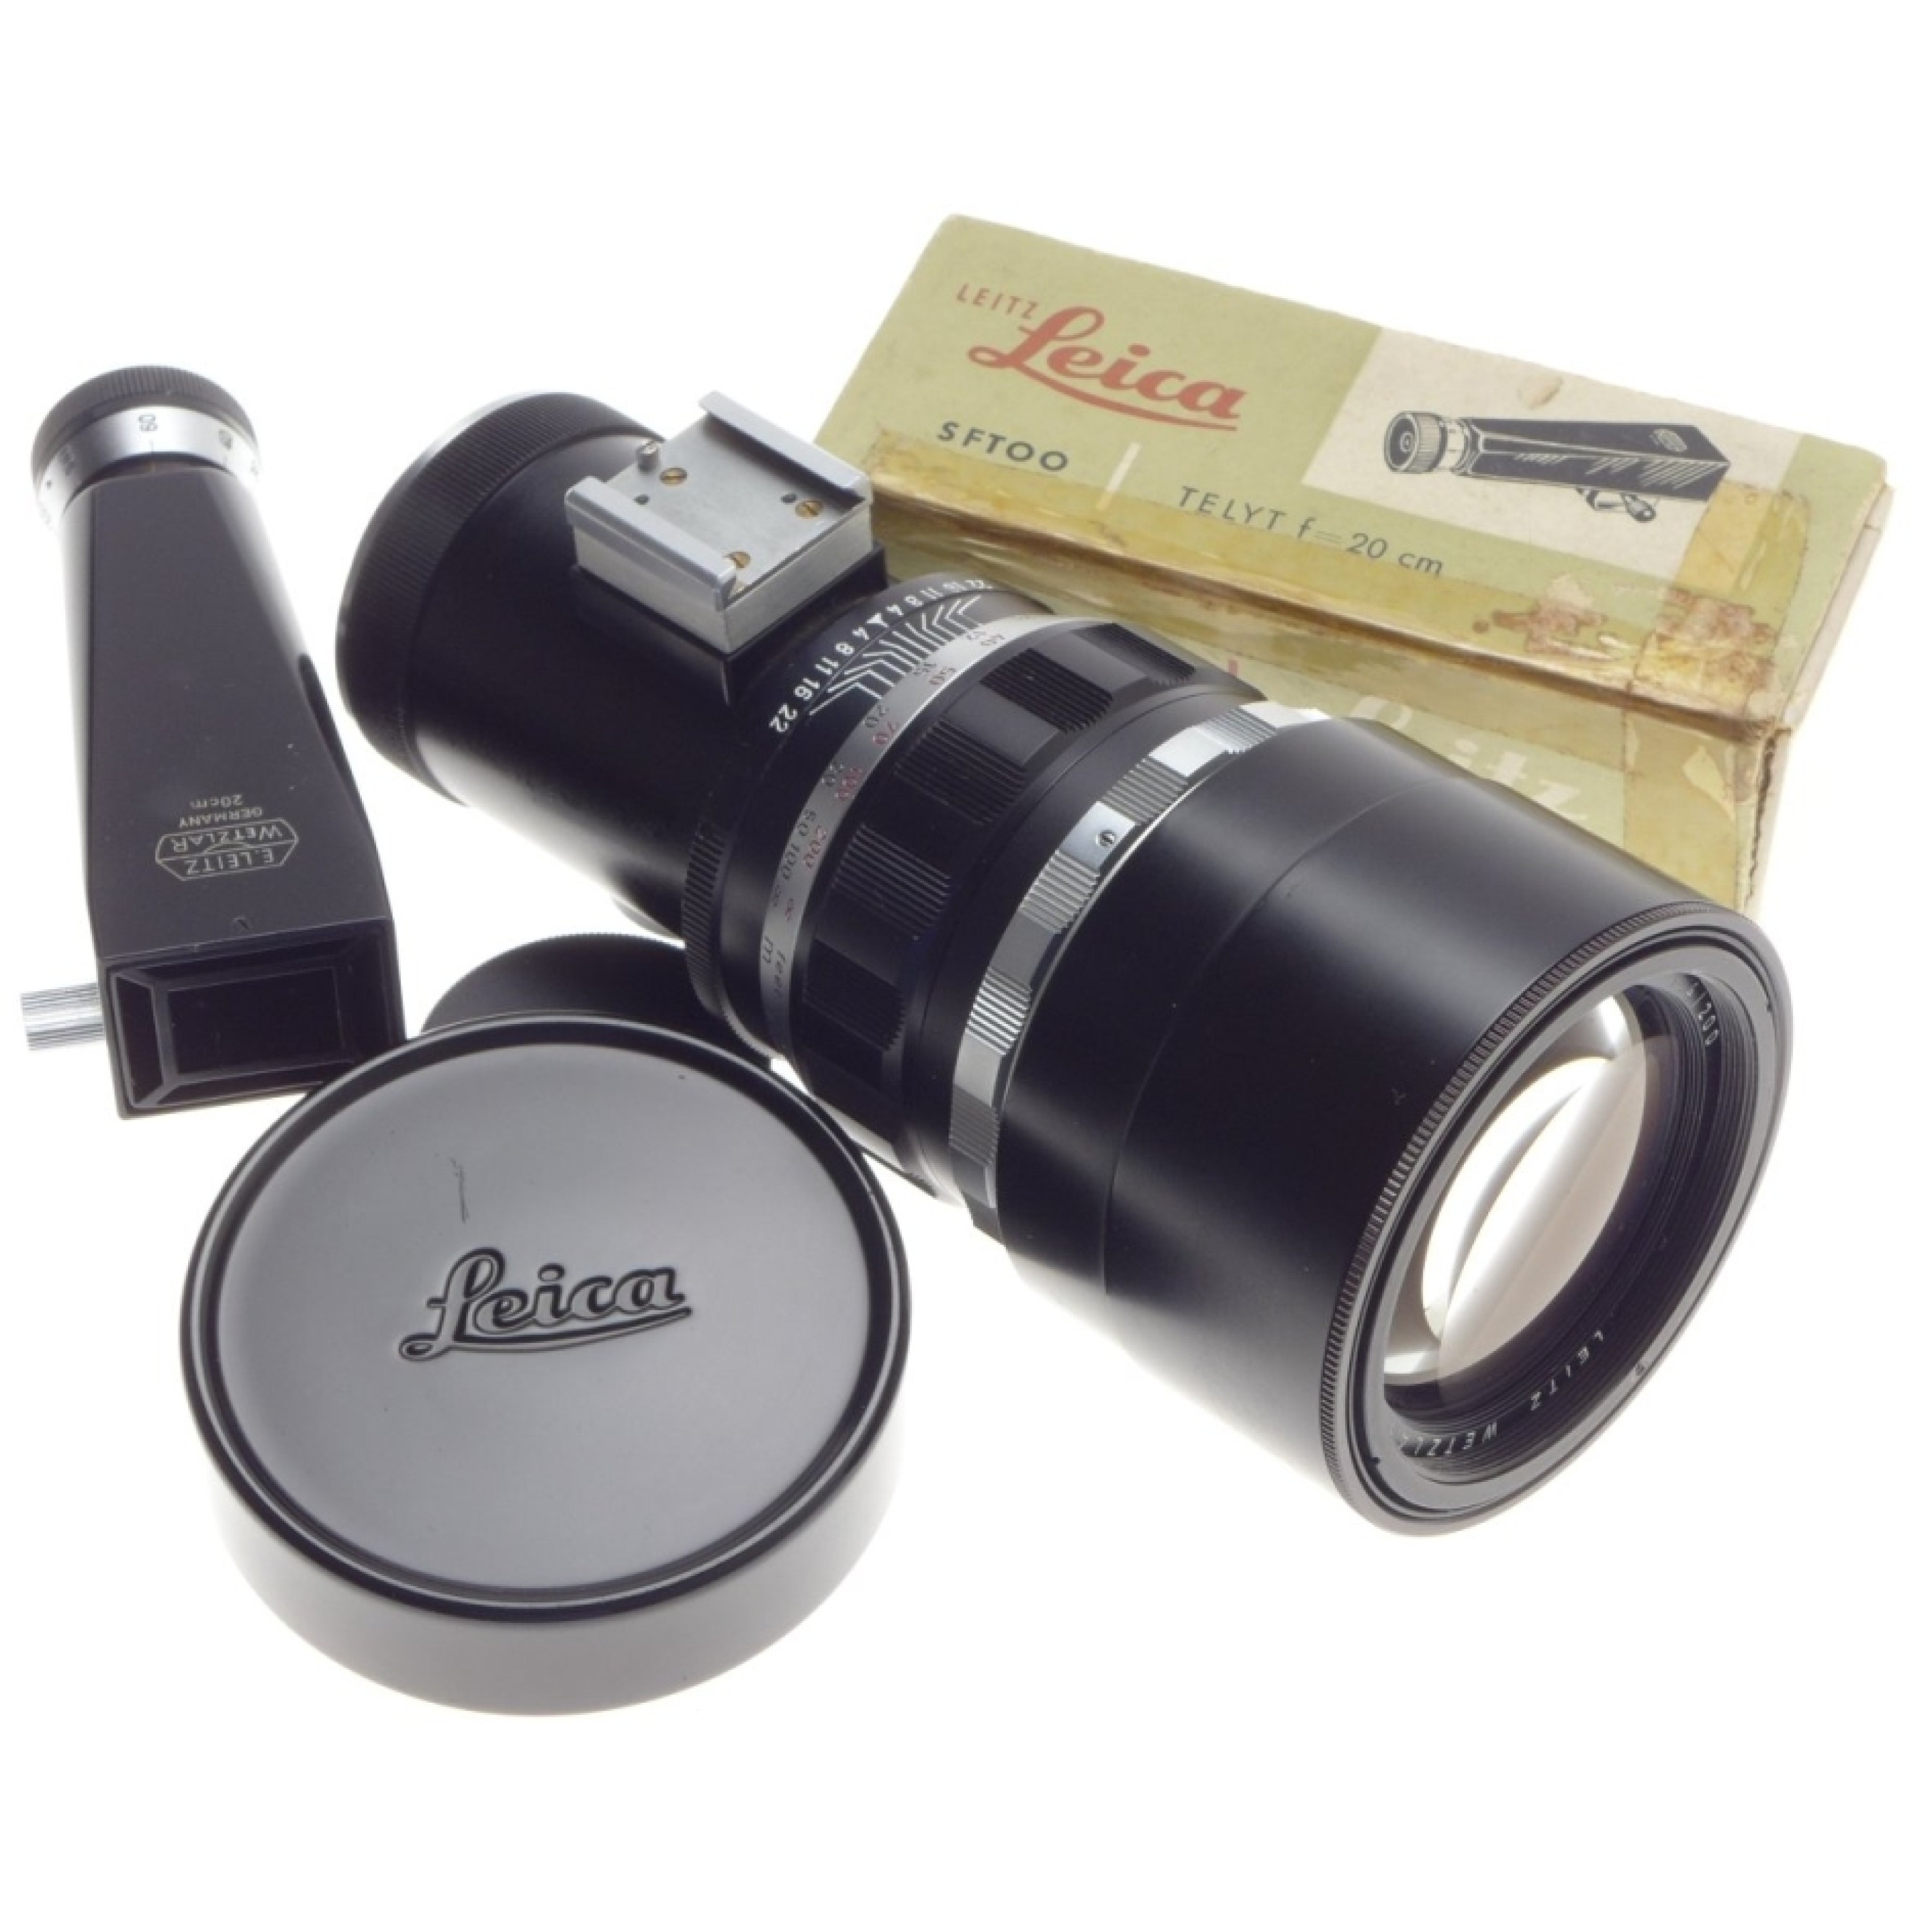 Leitz(Leica) : Telyt 200mm + VISOFLEX Ivisoflex関連